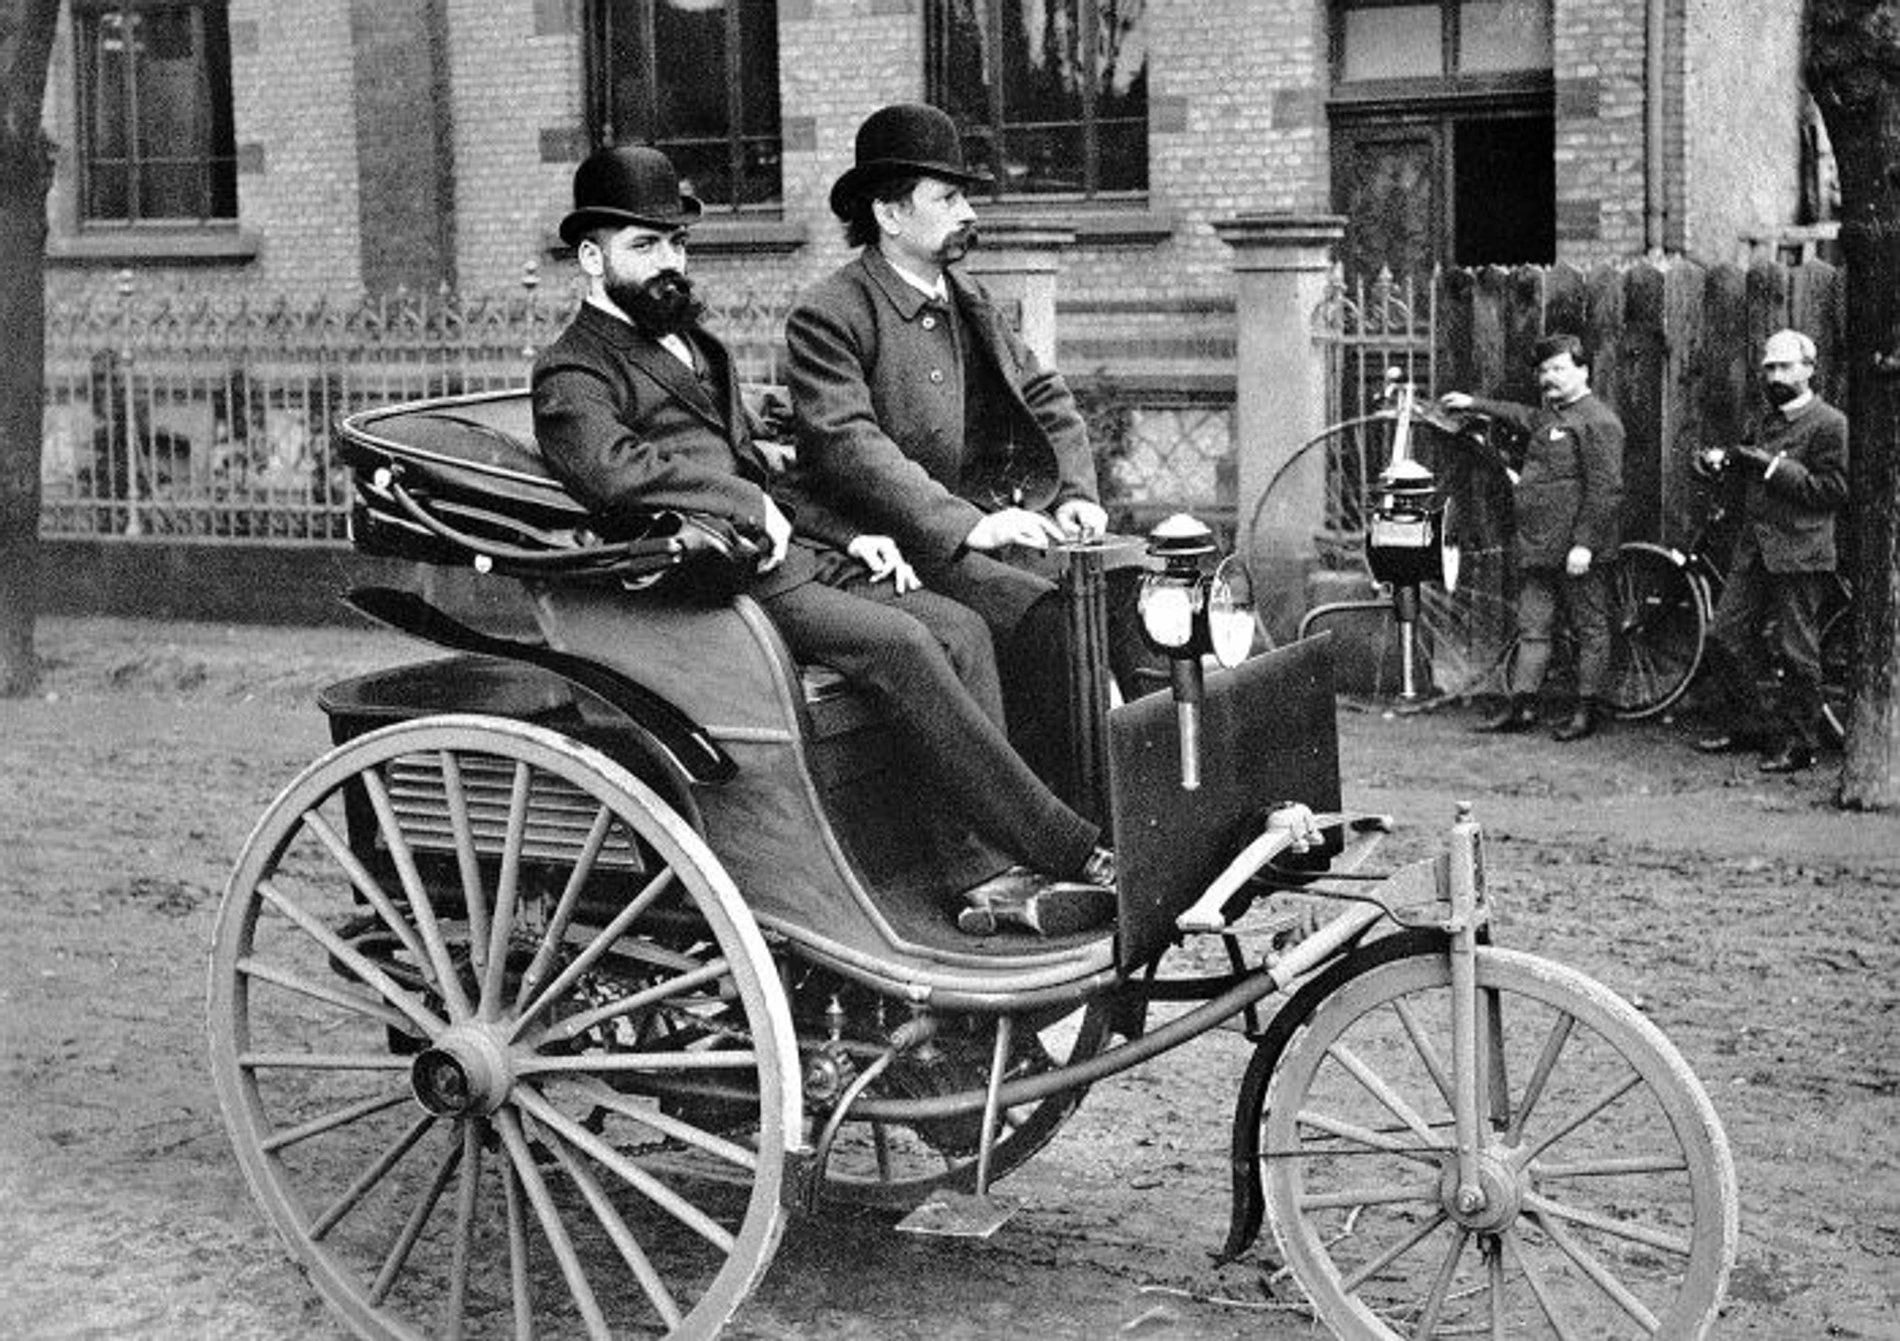 История. Карл Бенц автомобиль 1886 года. Карл Бенц 1885. Первый автомобиль 1885 Карл Бенц. Автомобиль Карла Бенца 1885.